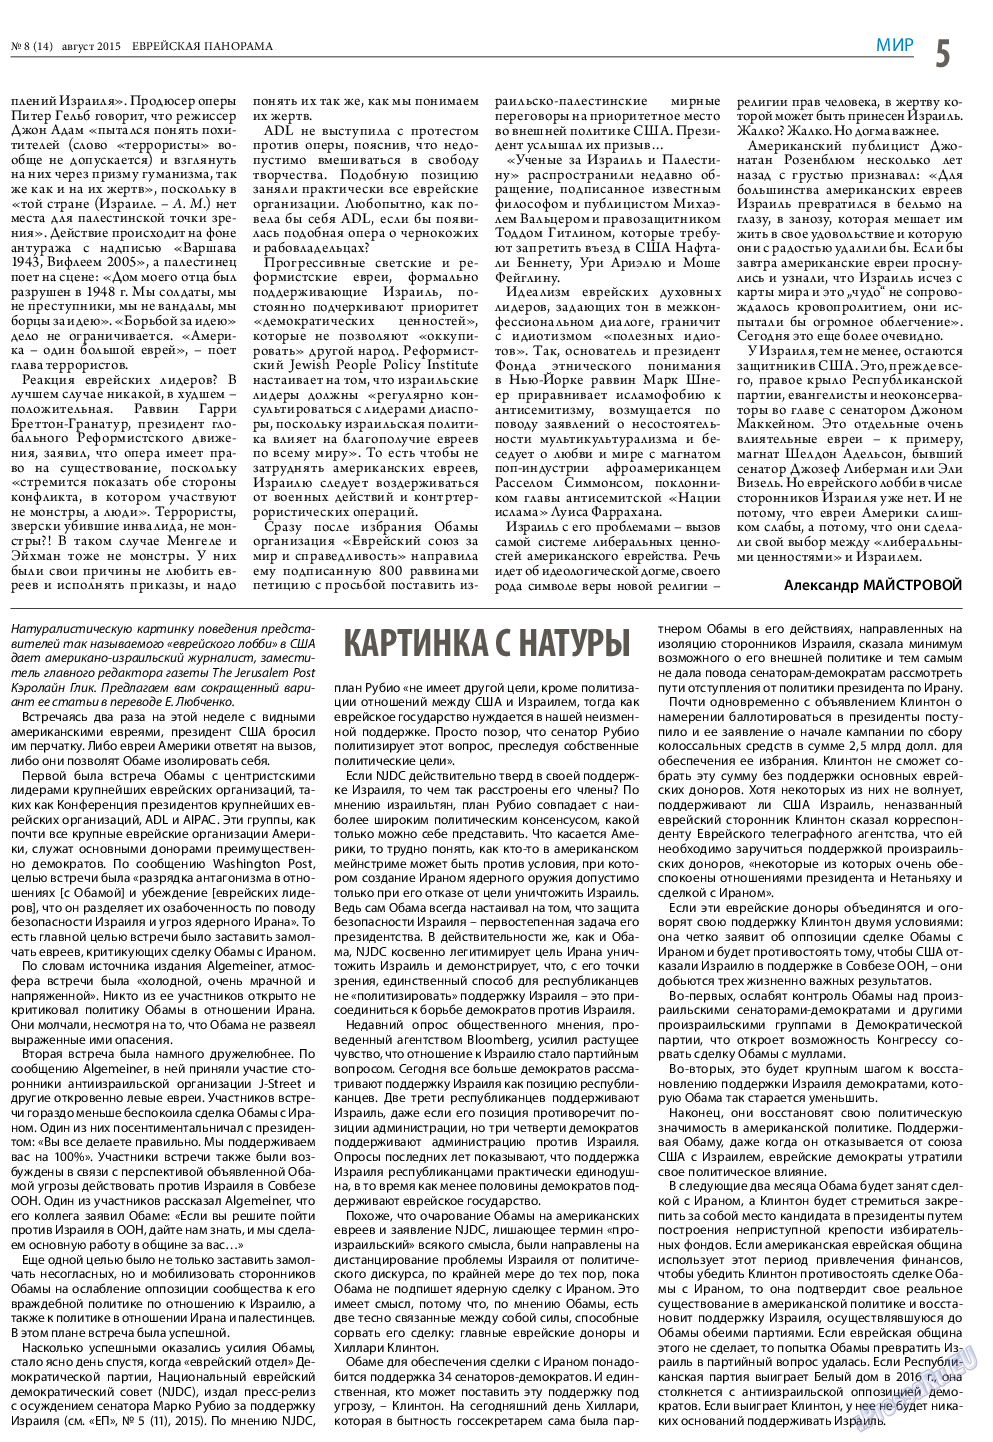 Еврейская панорама, газета. 2015 №8 стр.5